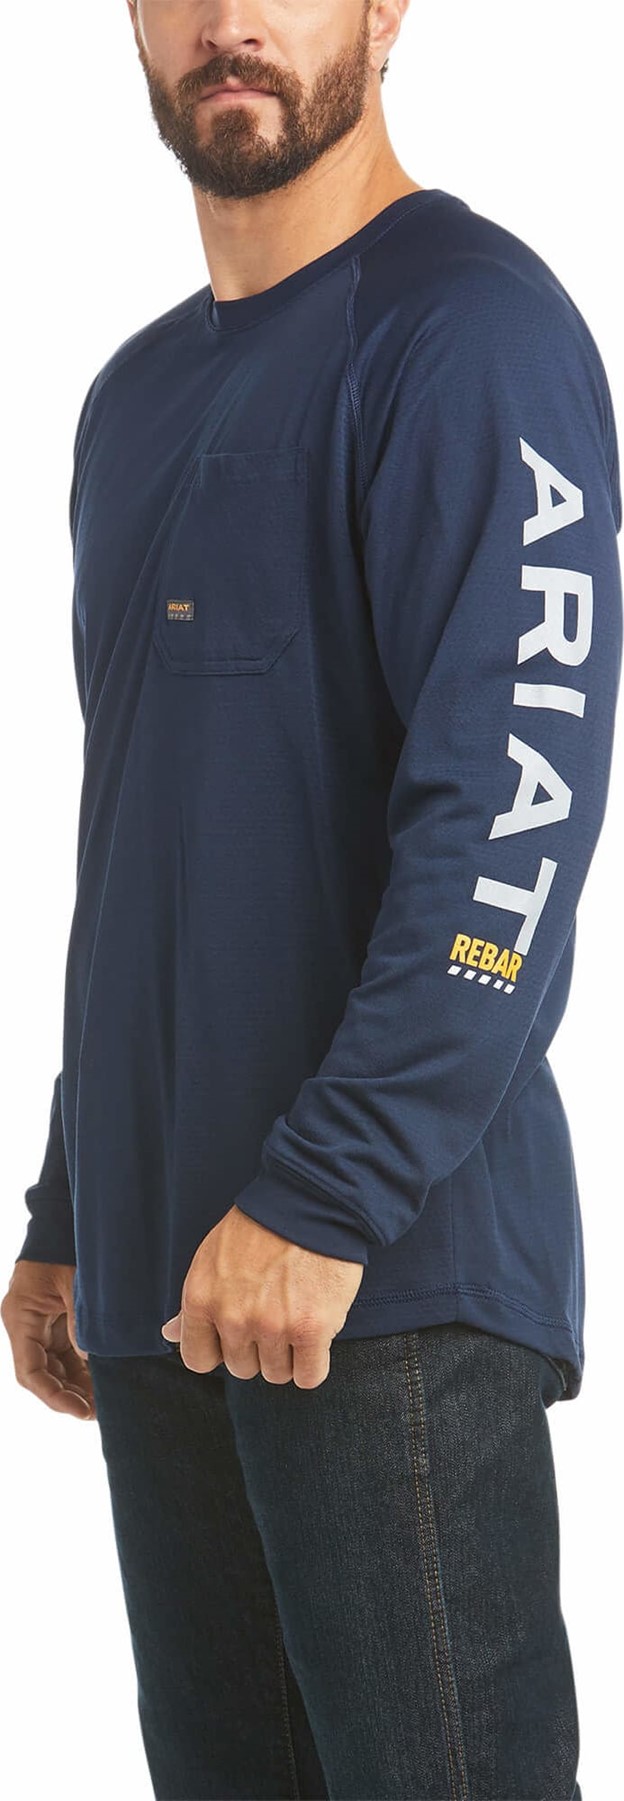 Ariat Rebar Heat Fighter Graphic Logo Crewneck Pocket L/S Shirt - Navy